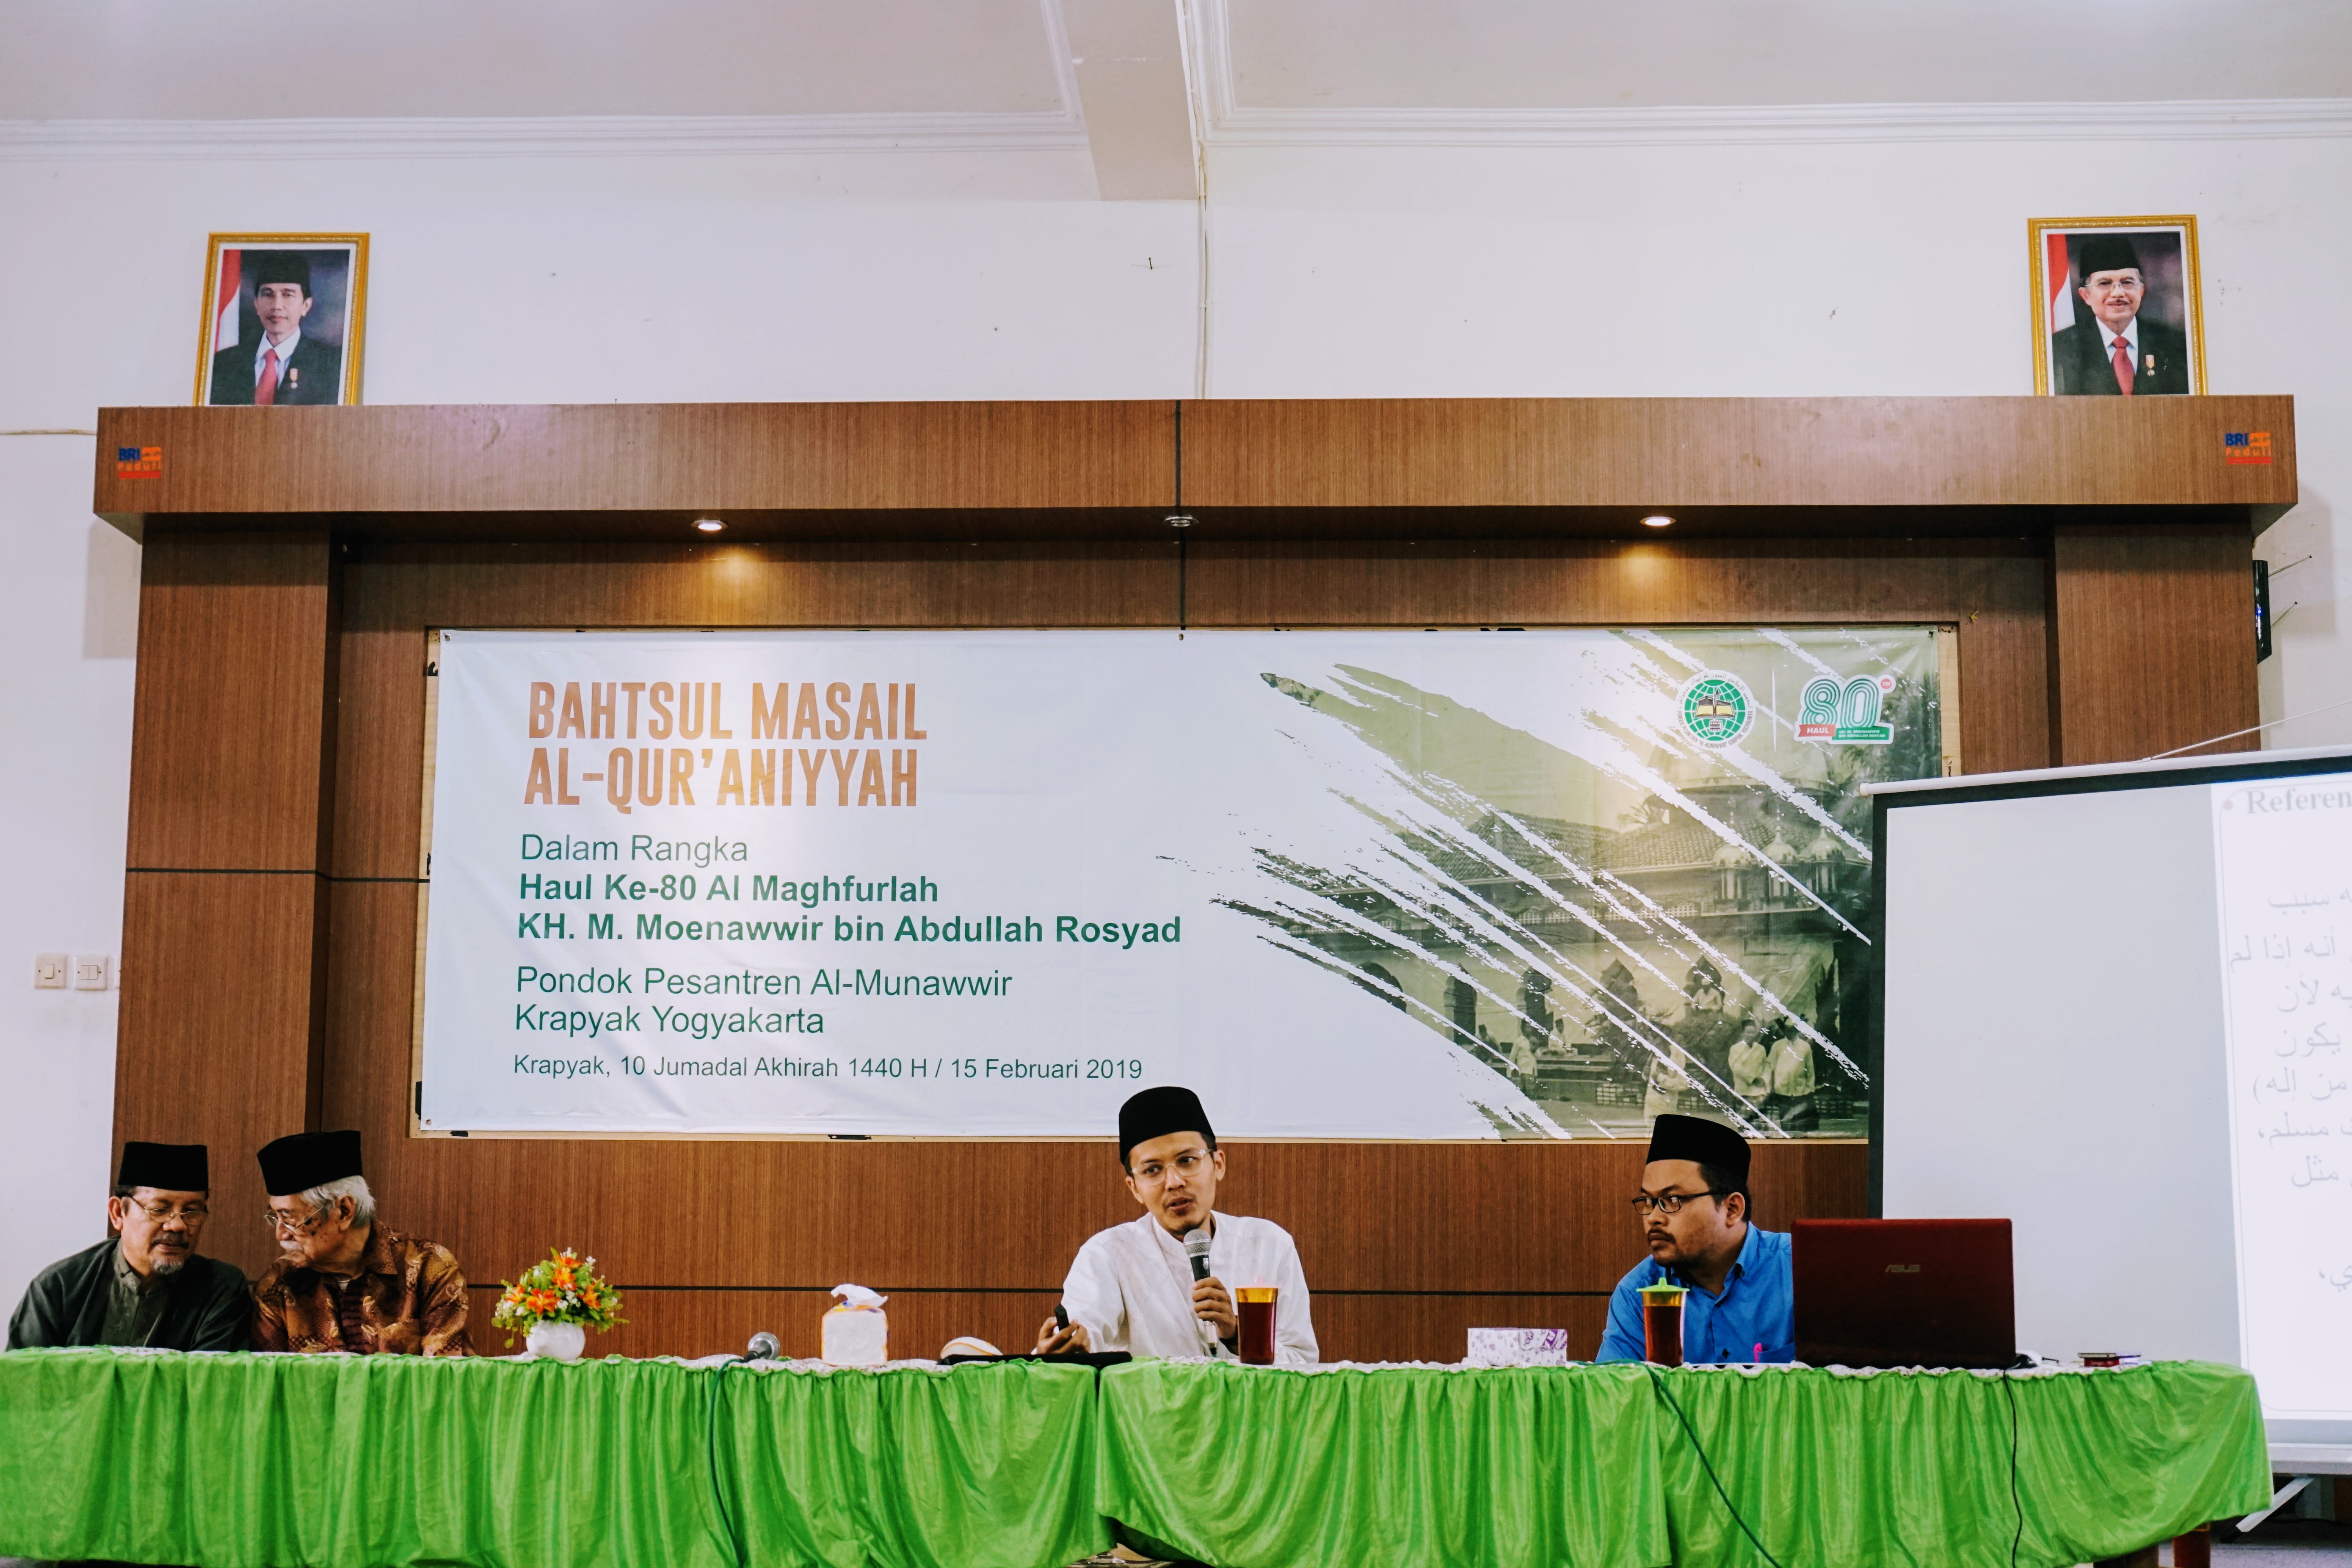 Sambut Haul Mbah Munawwir, Alumni Menggelar “Bahtsul Masa’il al-Qur’aniyyah”